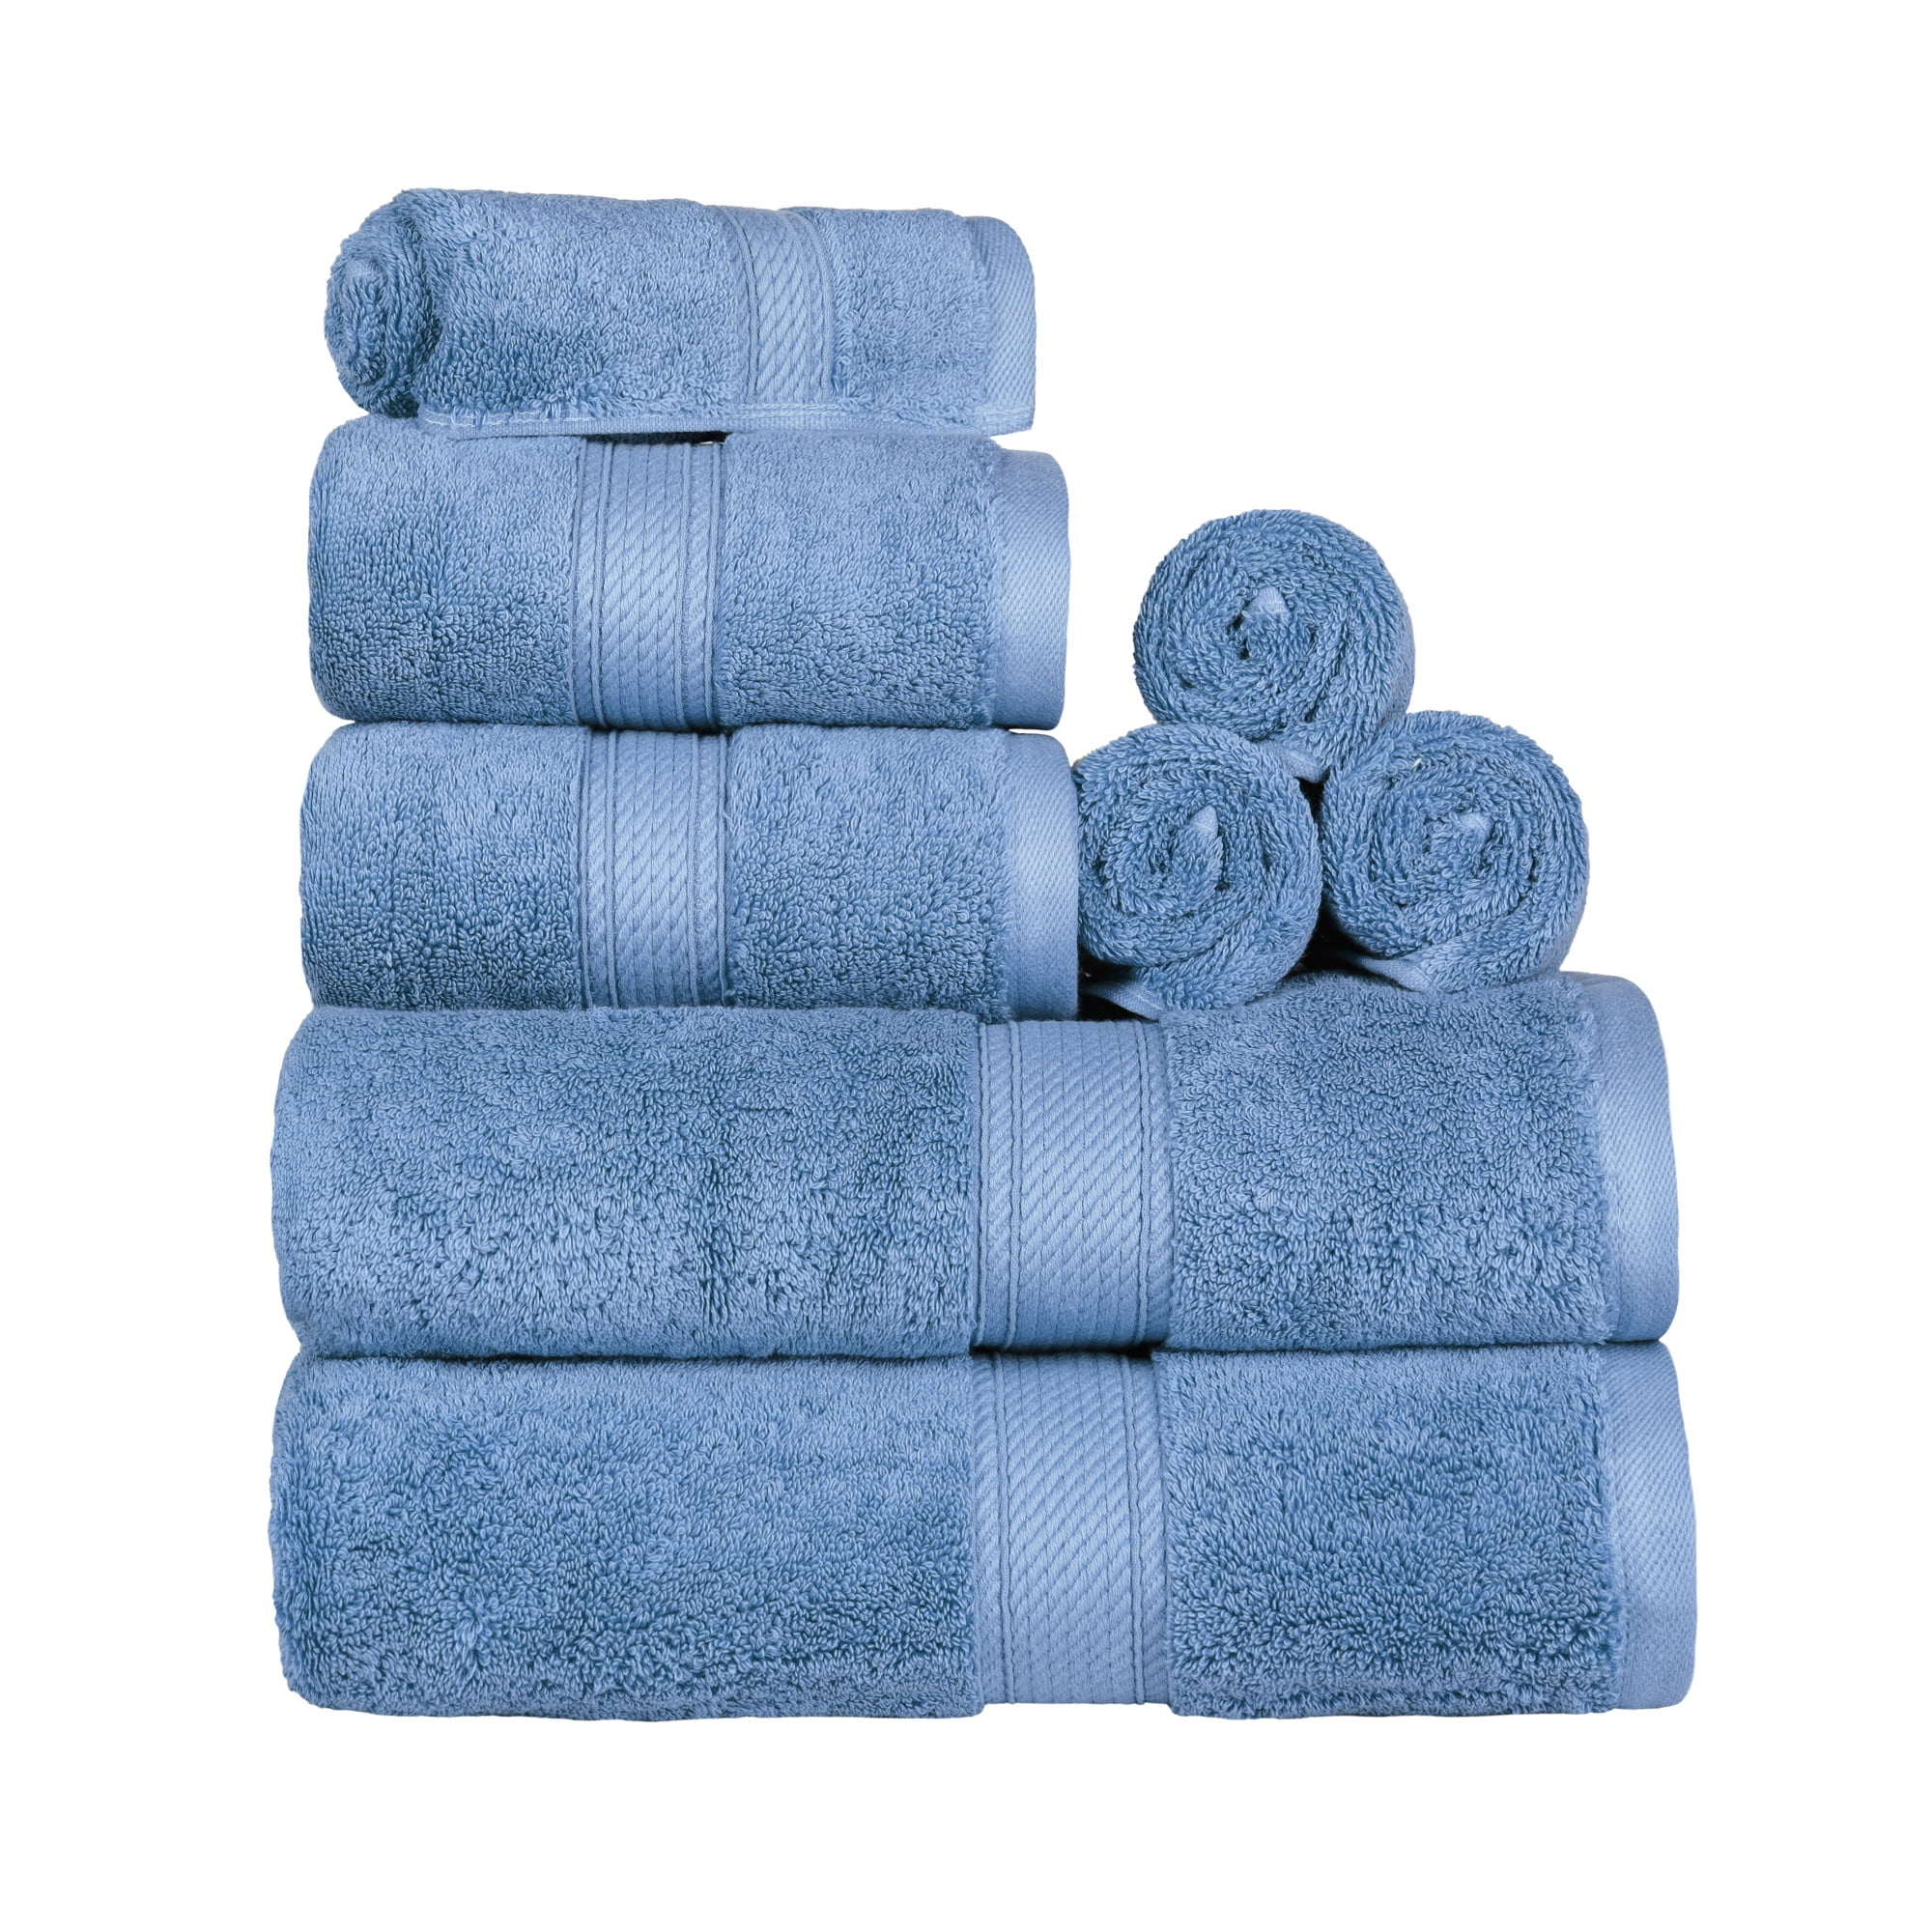 Superior Egyptian Cotton Towel Set 4 Bath 4 Face Towels Winter Blue 4 Hand 